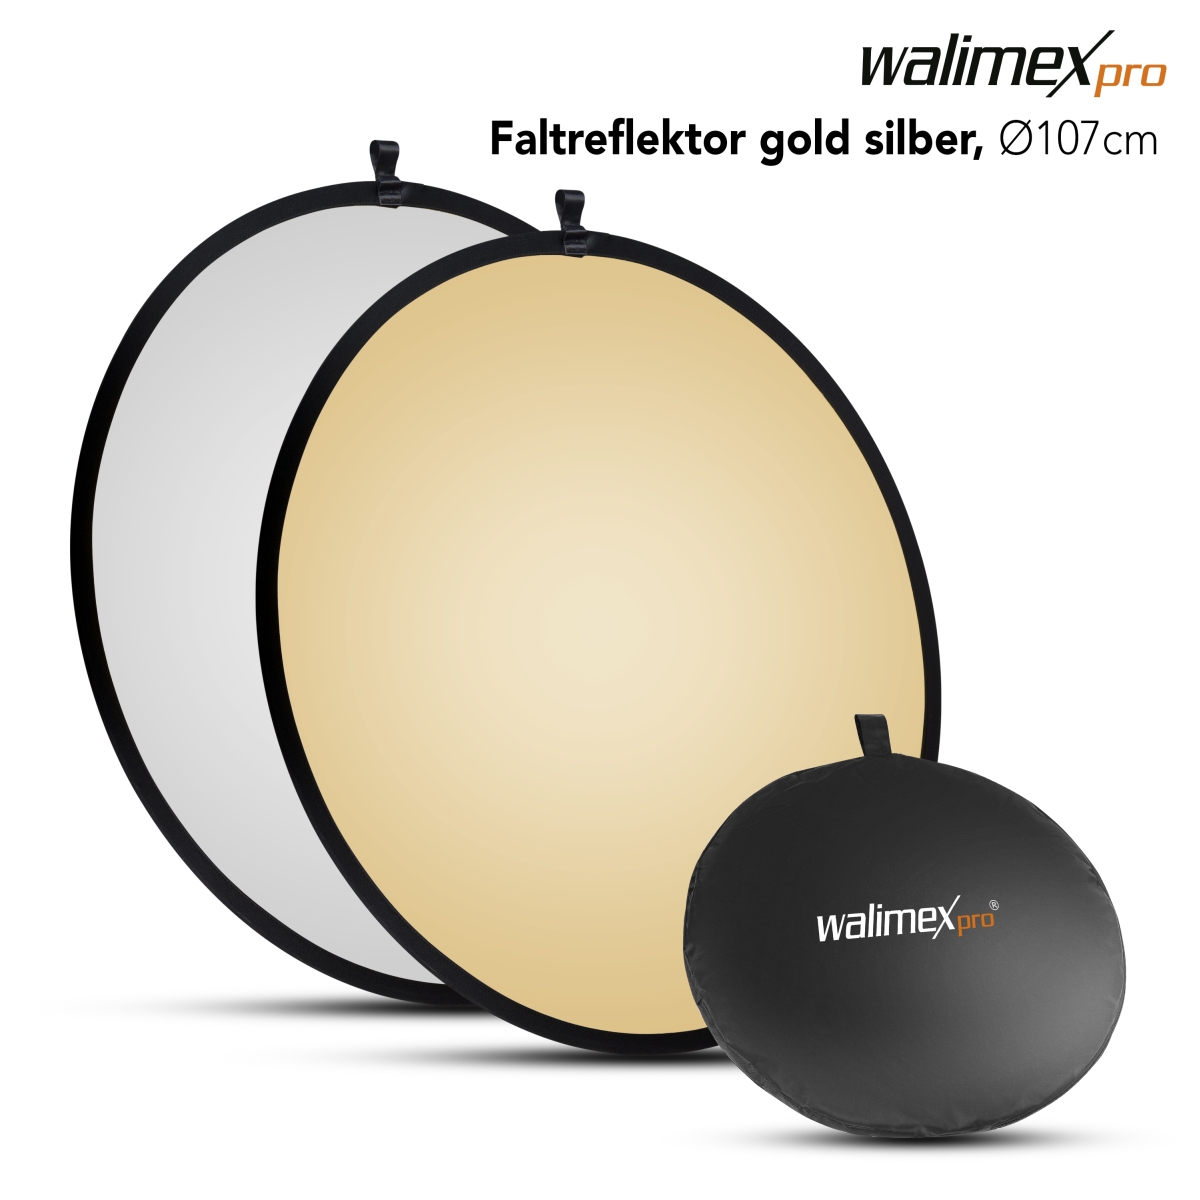 Walimex pro Faltreflektor gold/silber Ø 107 cm 